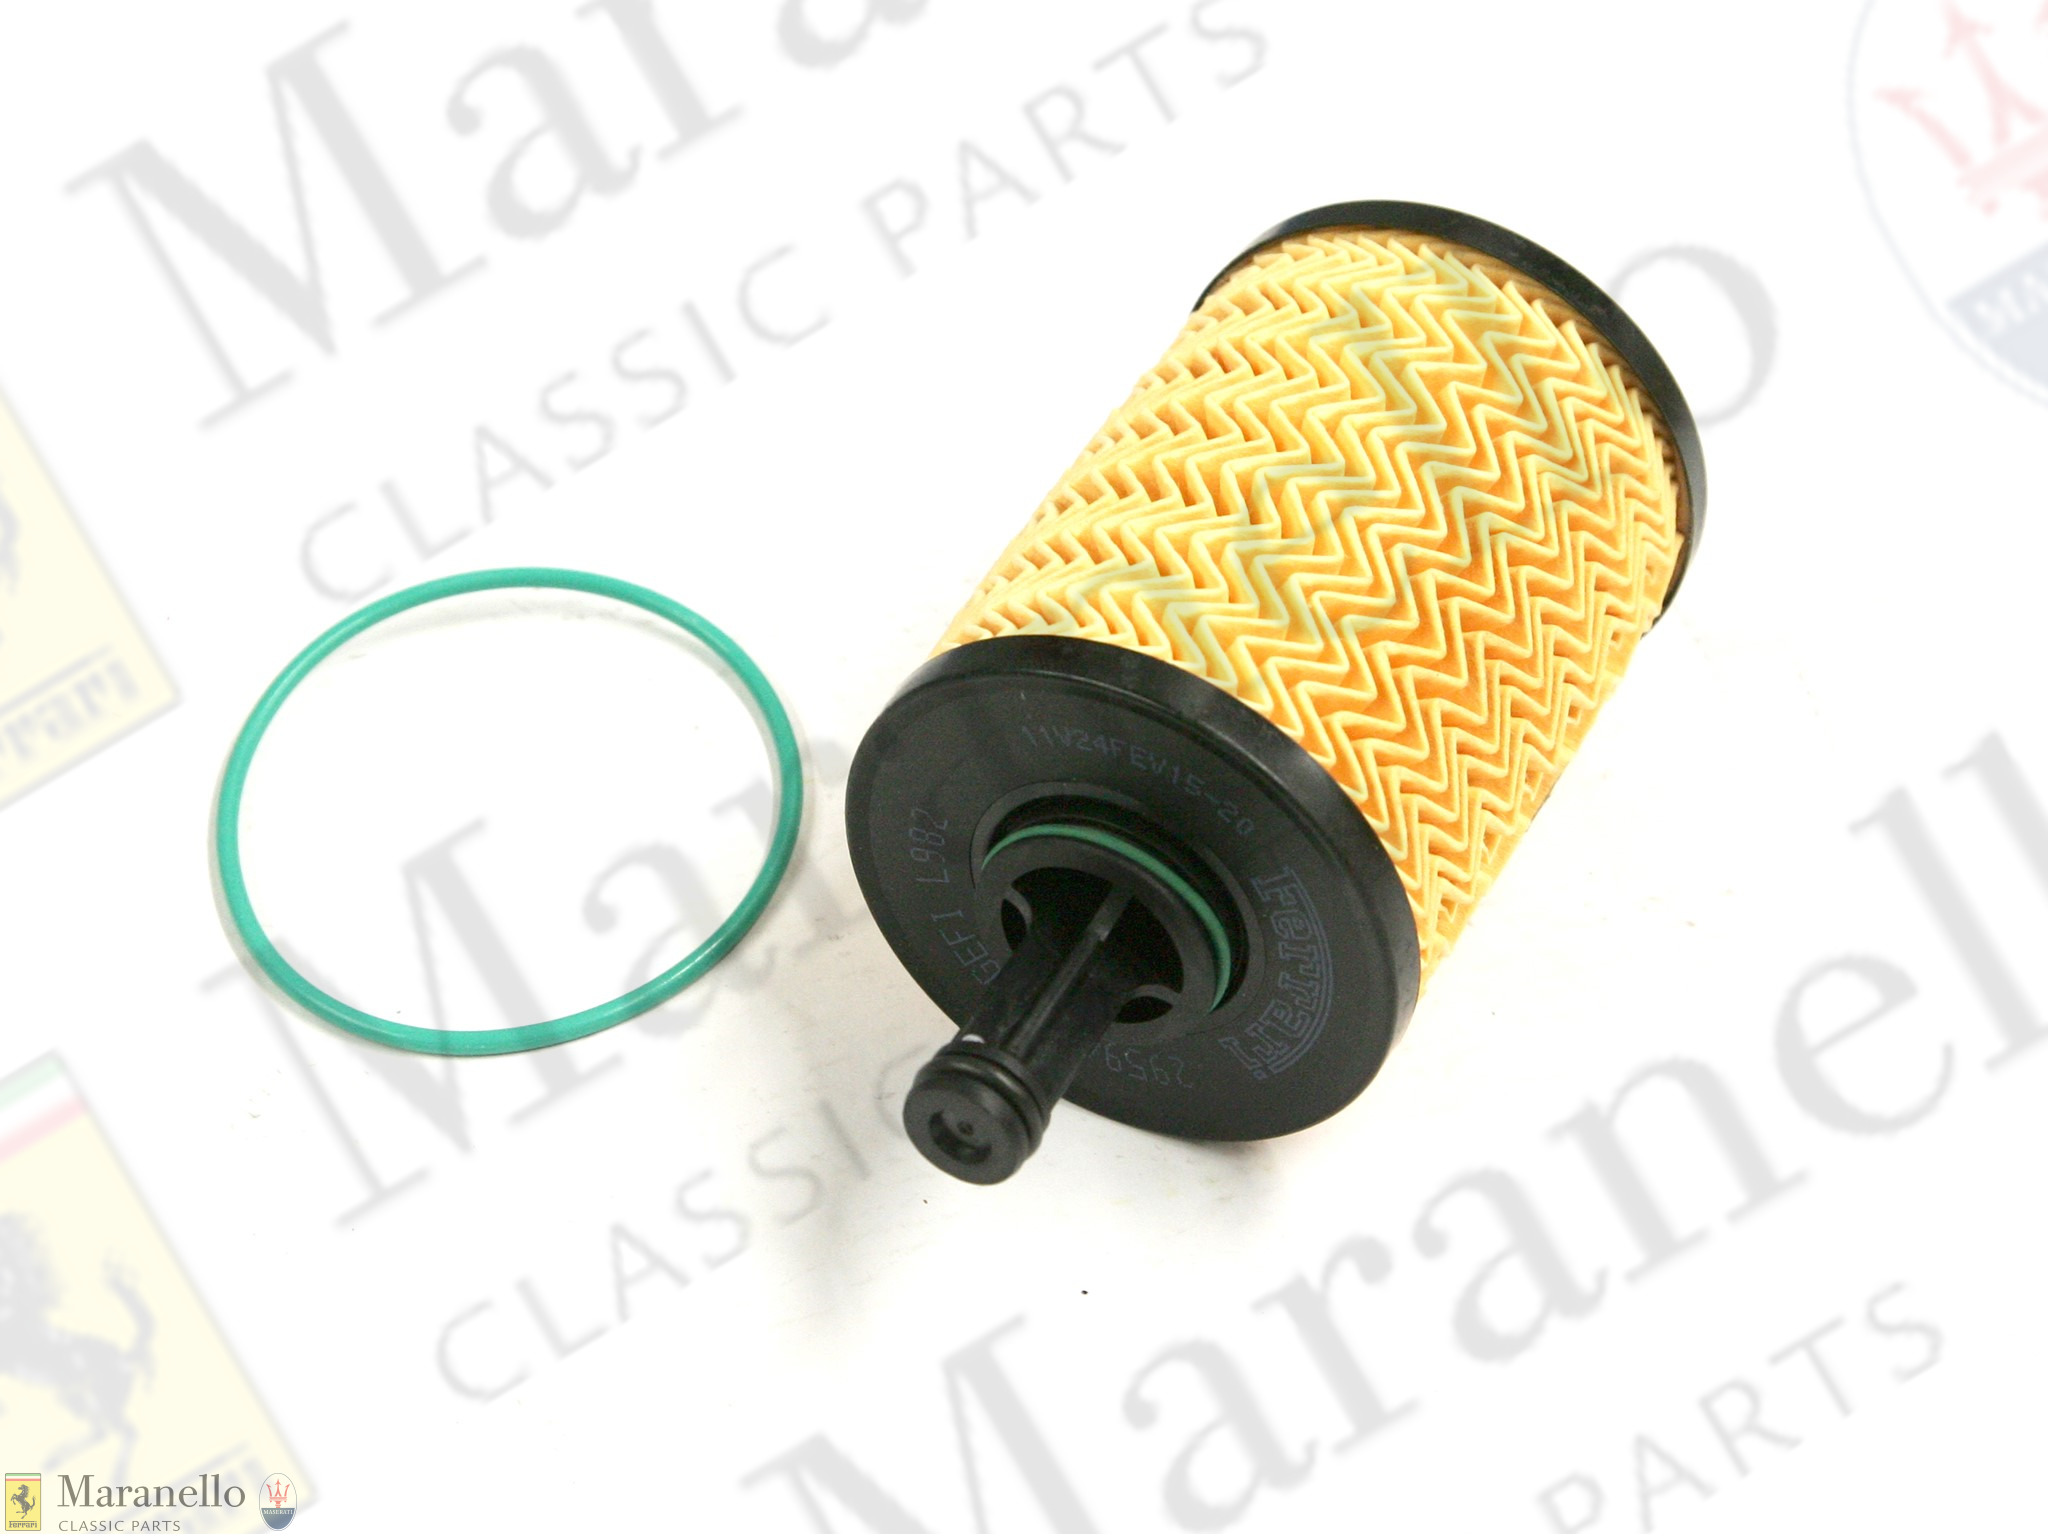 Ferrari part 295948 - Oil Filter Cartridge | Maranello Classic Parts